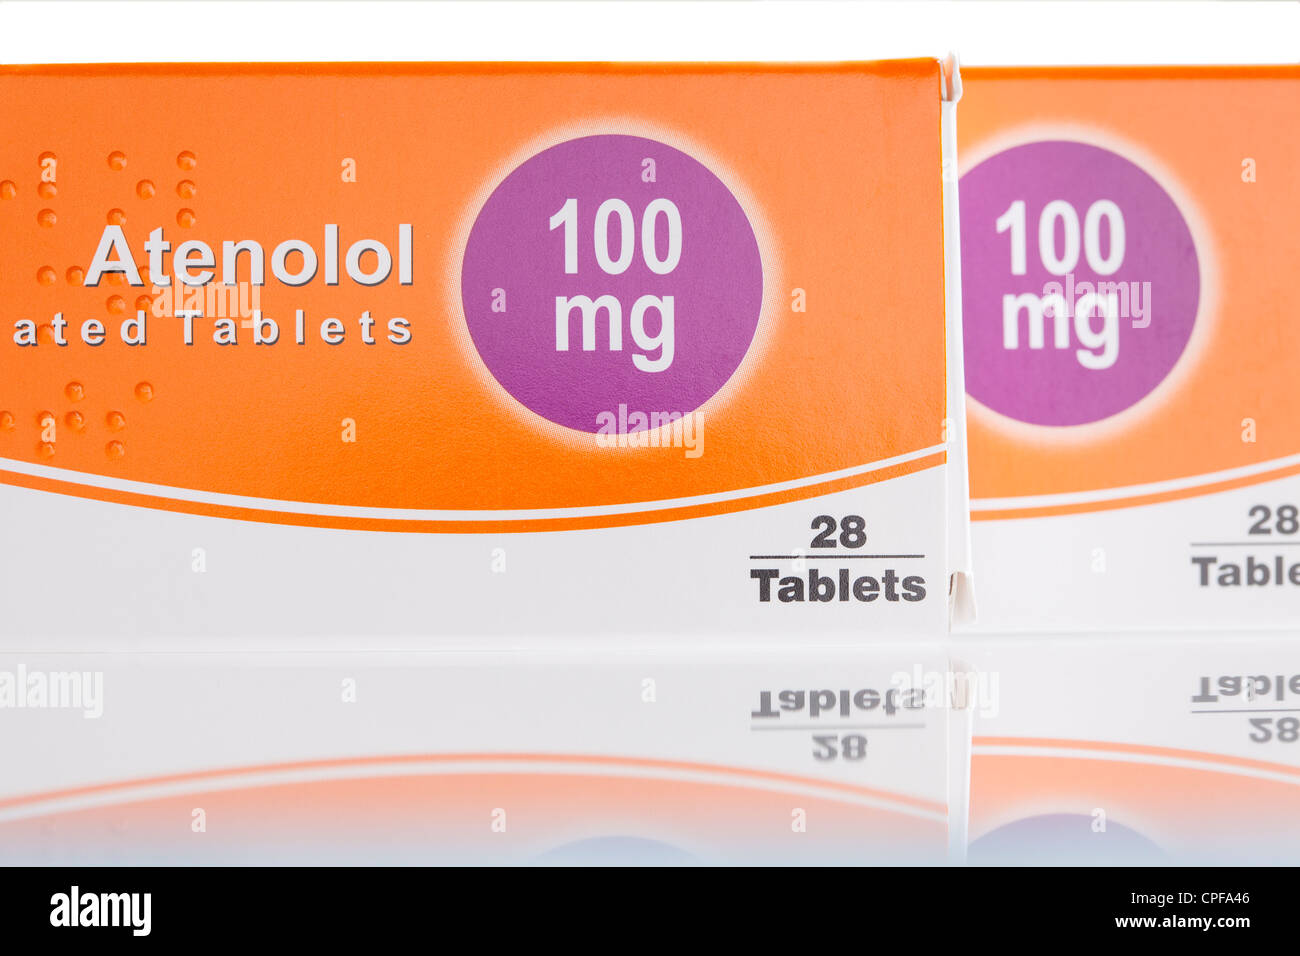 Atenolol 100mg tablet box beta blocker Stock Photo